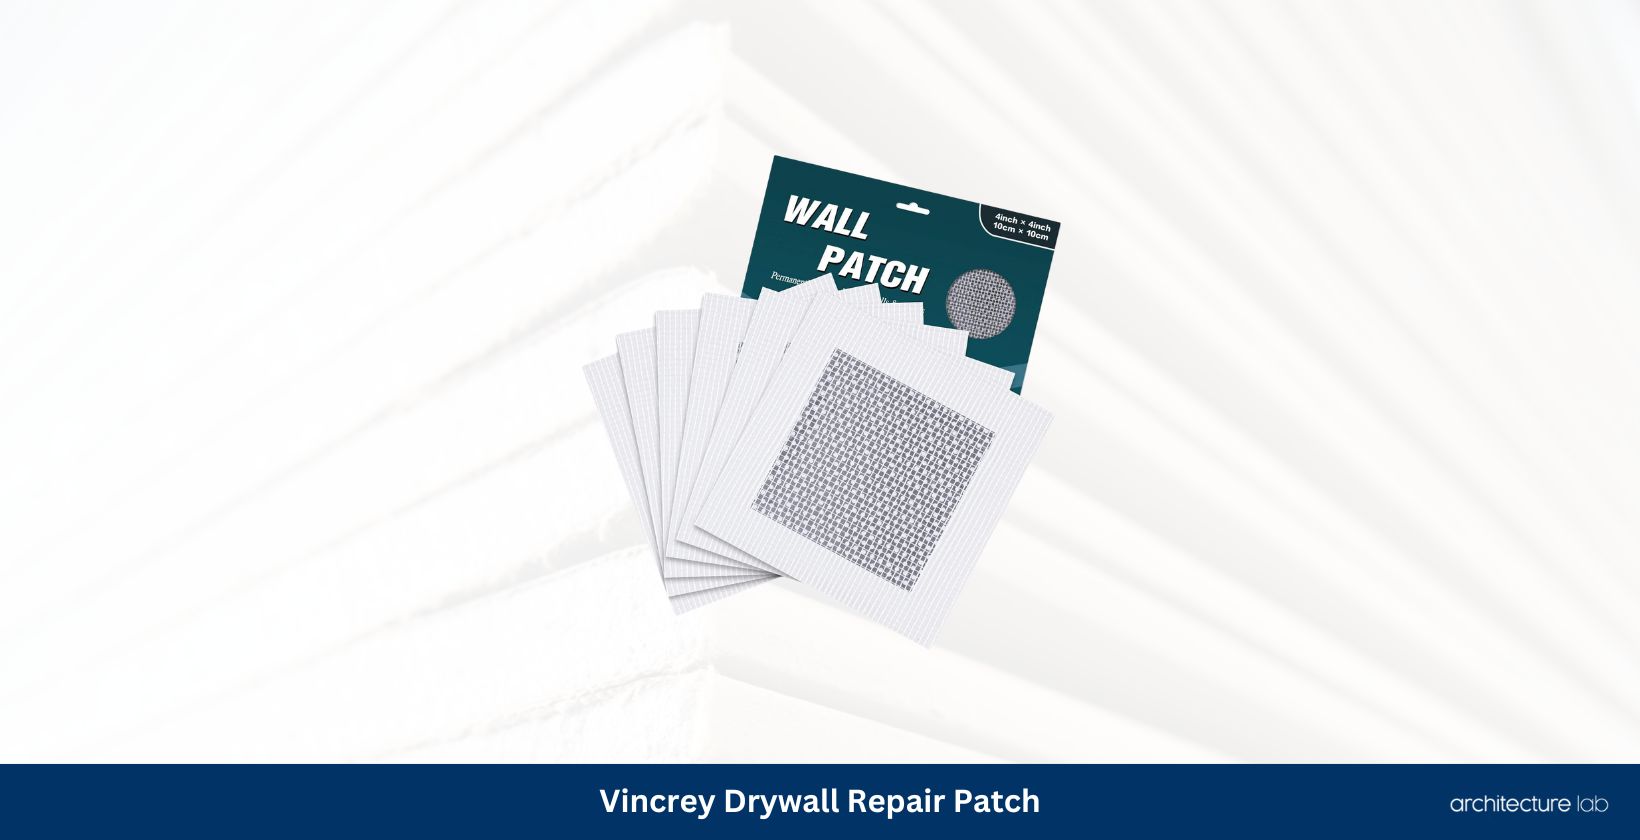 Vincrey drywall repair patch